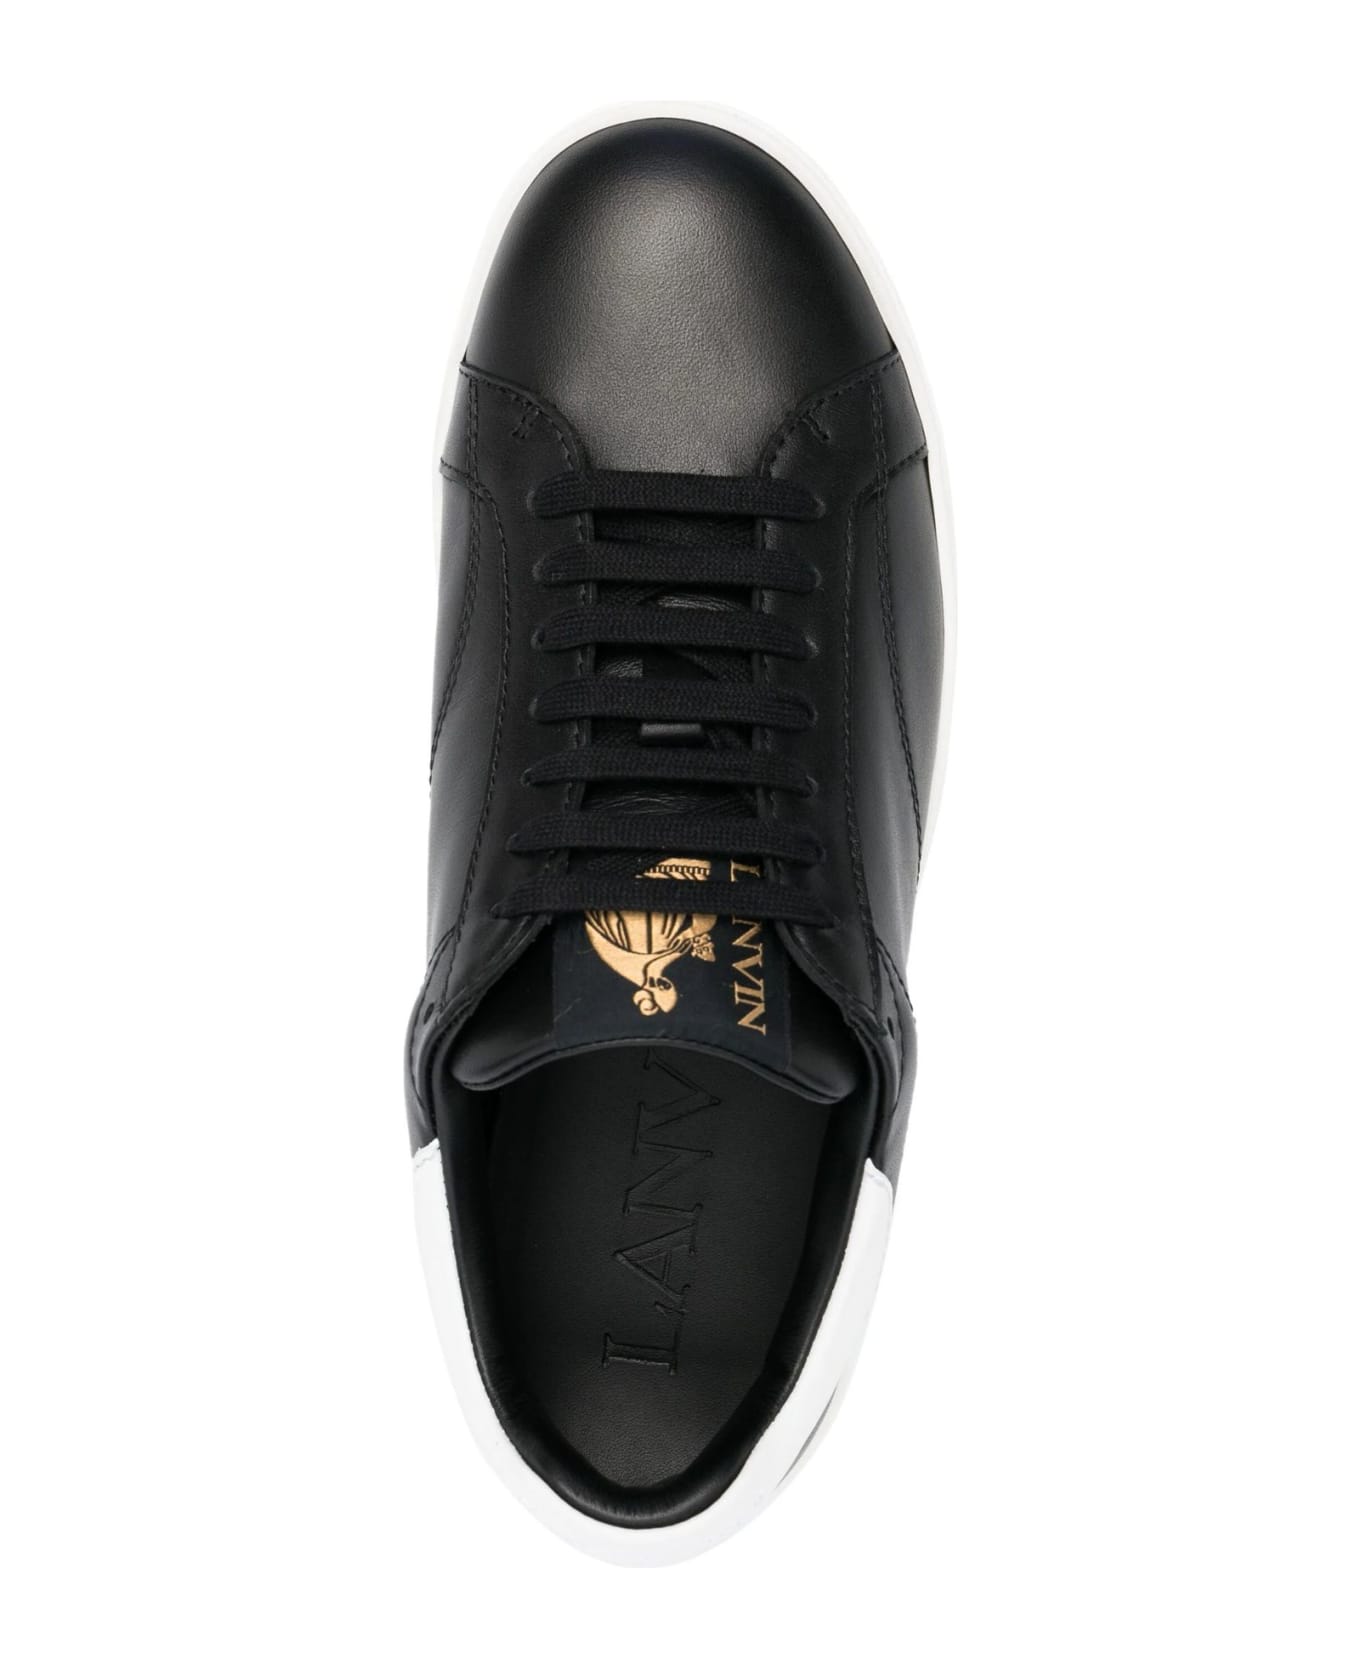 Lanvin Sneakers Black - Black